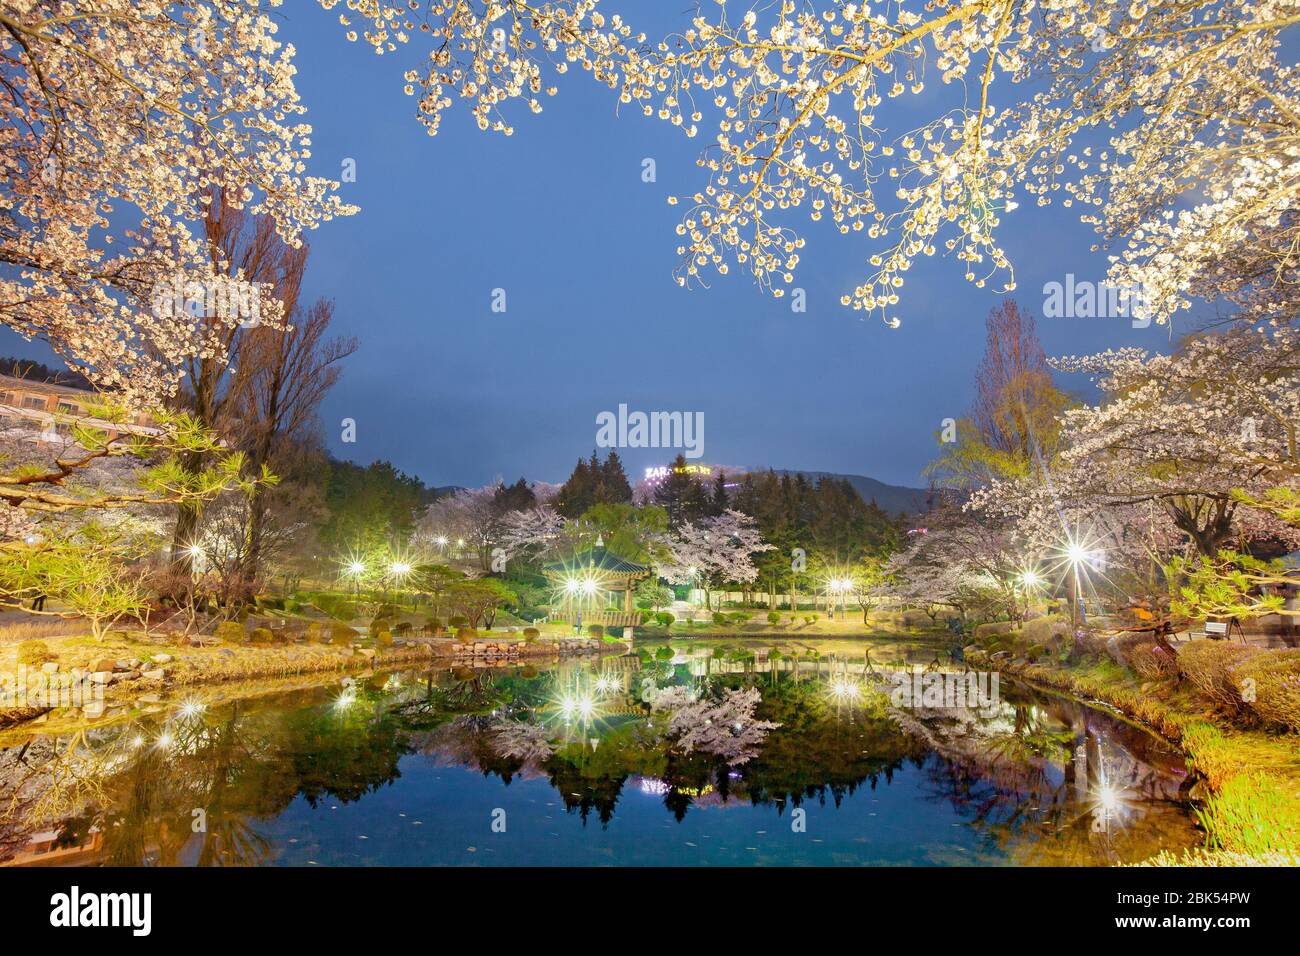 Vista nocturna, hermoso paisaje de cerezos en flor en el Pabellón Bomunjeong en Gyeongju, Corea Foto de stock